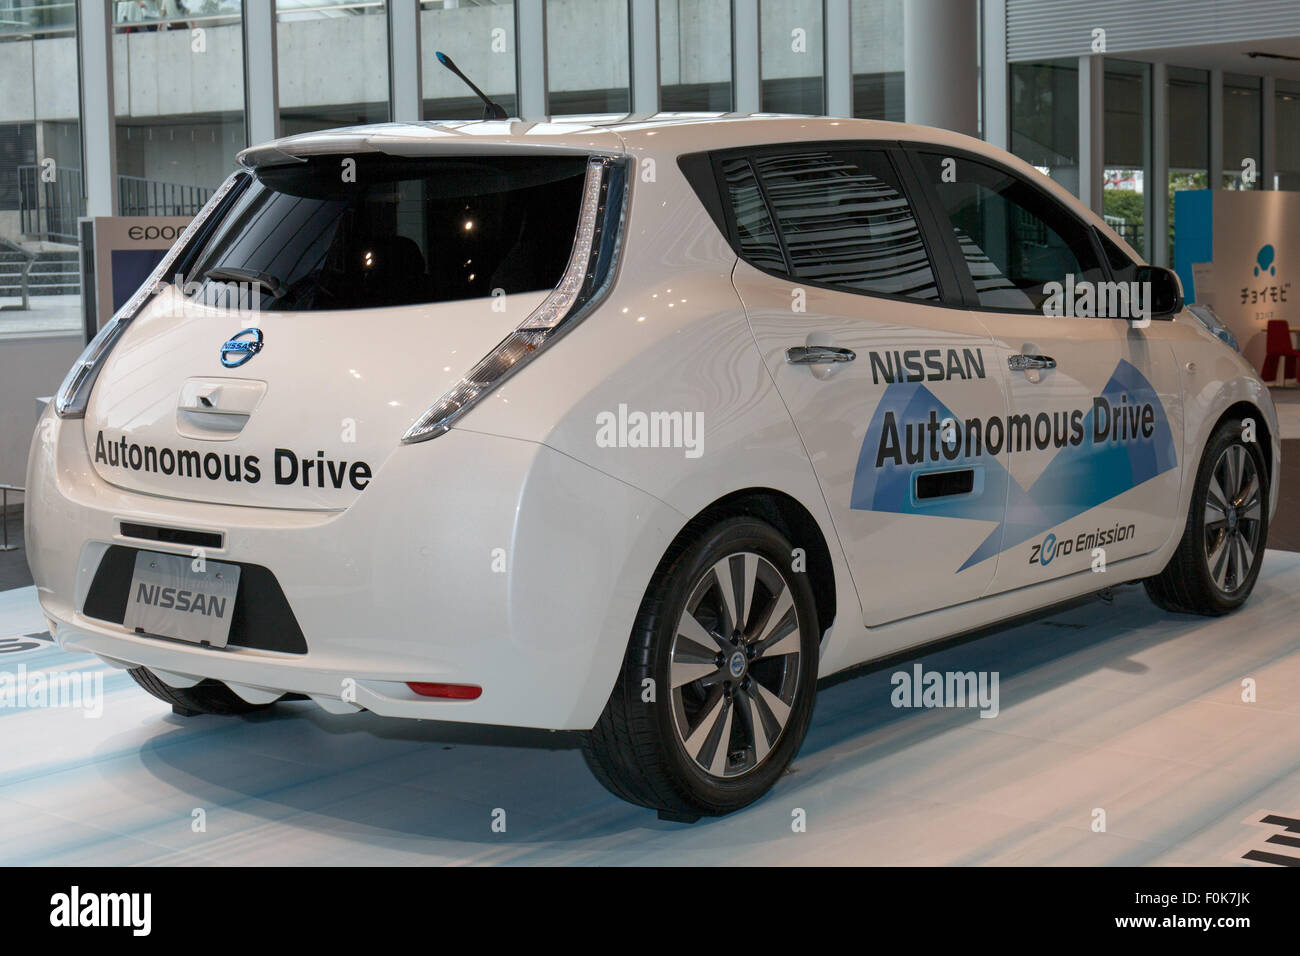 Nissan autonome Antrieb hinten rechts 2015 Nissan Global Headquarters Gallery Stockfoto